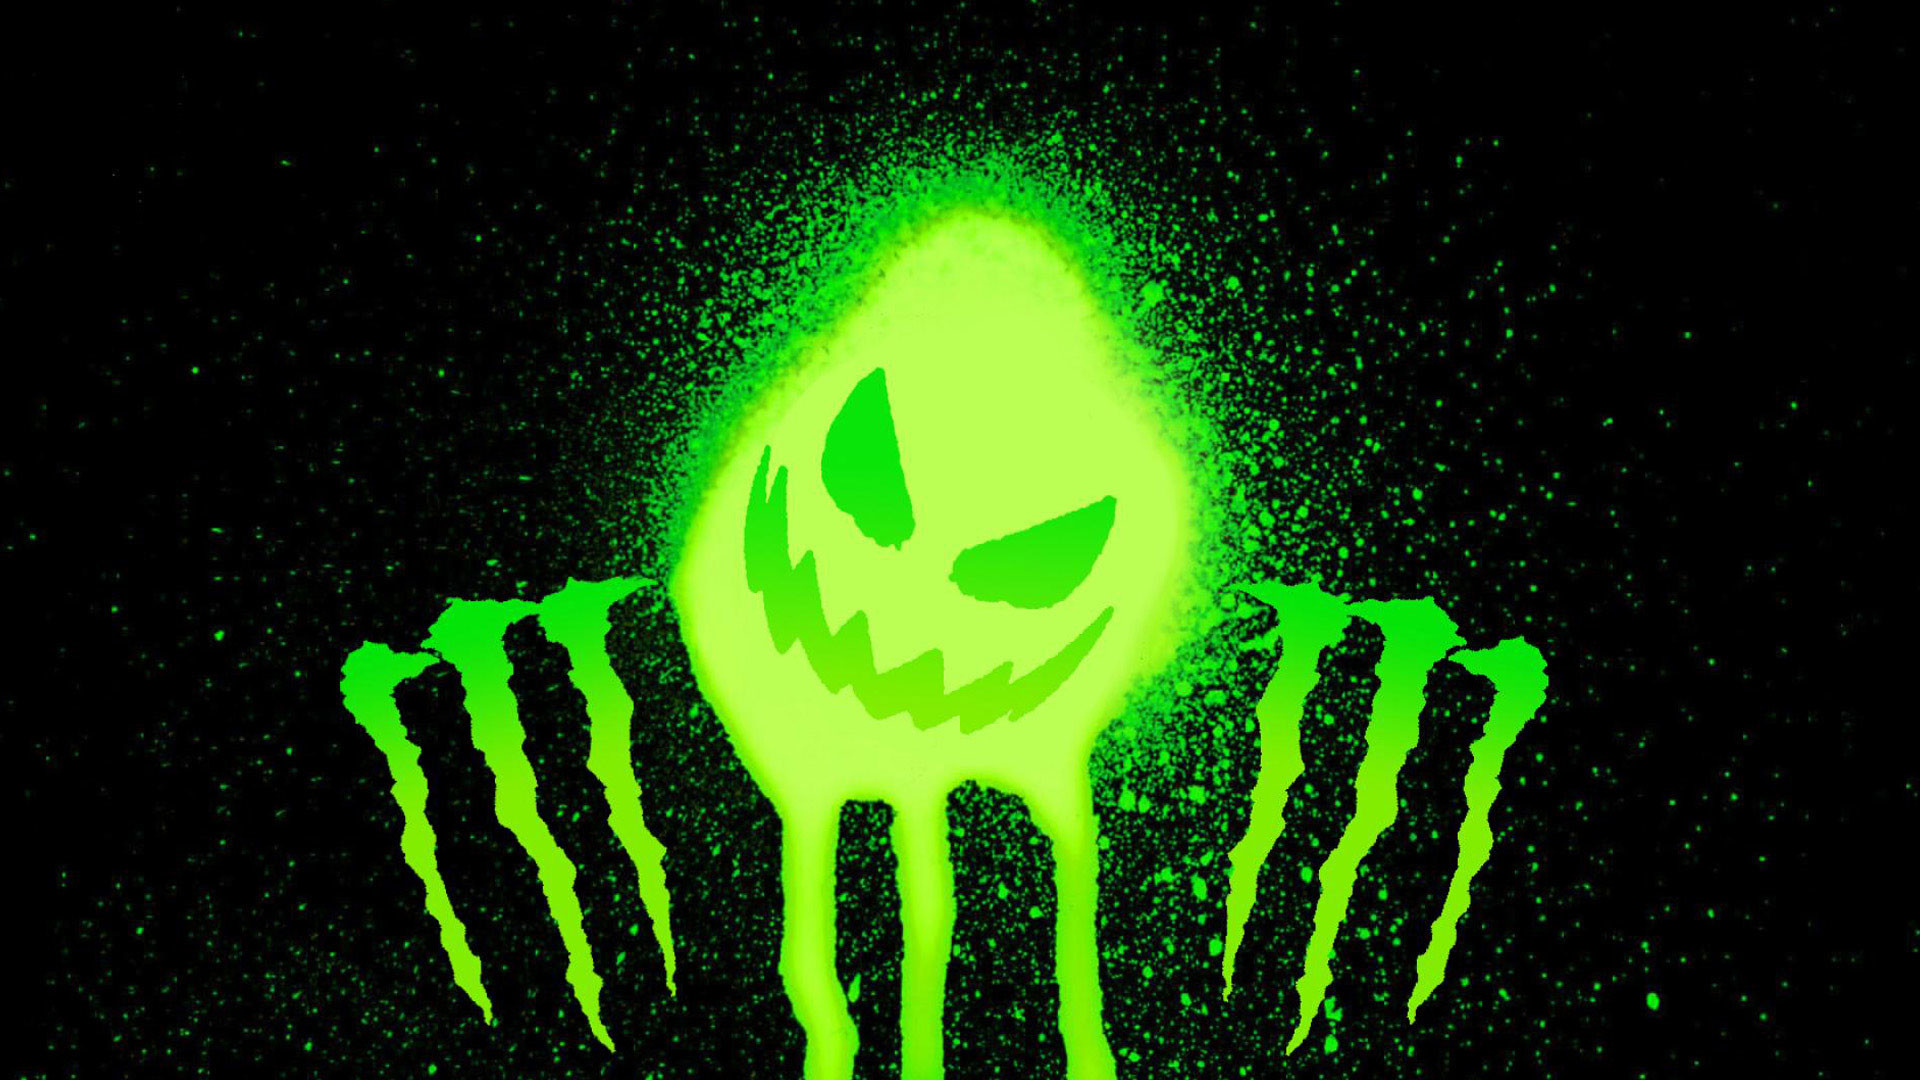 1920x1080 hd pics photos best monster logo green halloween neon spray hd quality  desktop background wallpaper